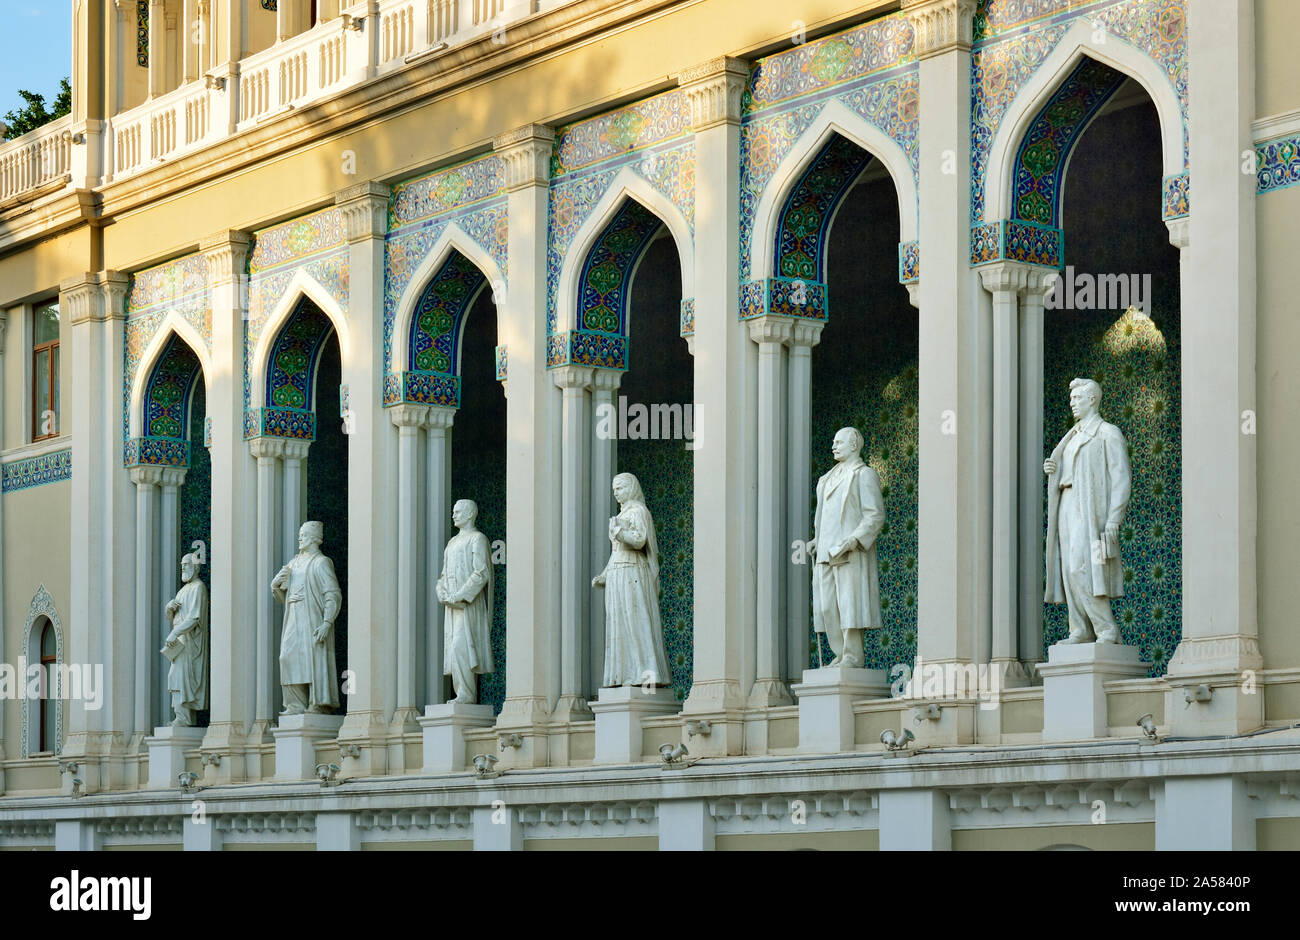 The Nizami Museum of Azerbaijani Literature in Baku, named after the great romantic epic poet Nizami Ganjavi. The statues are of famous Azerbaijani wr Stock Photo